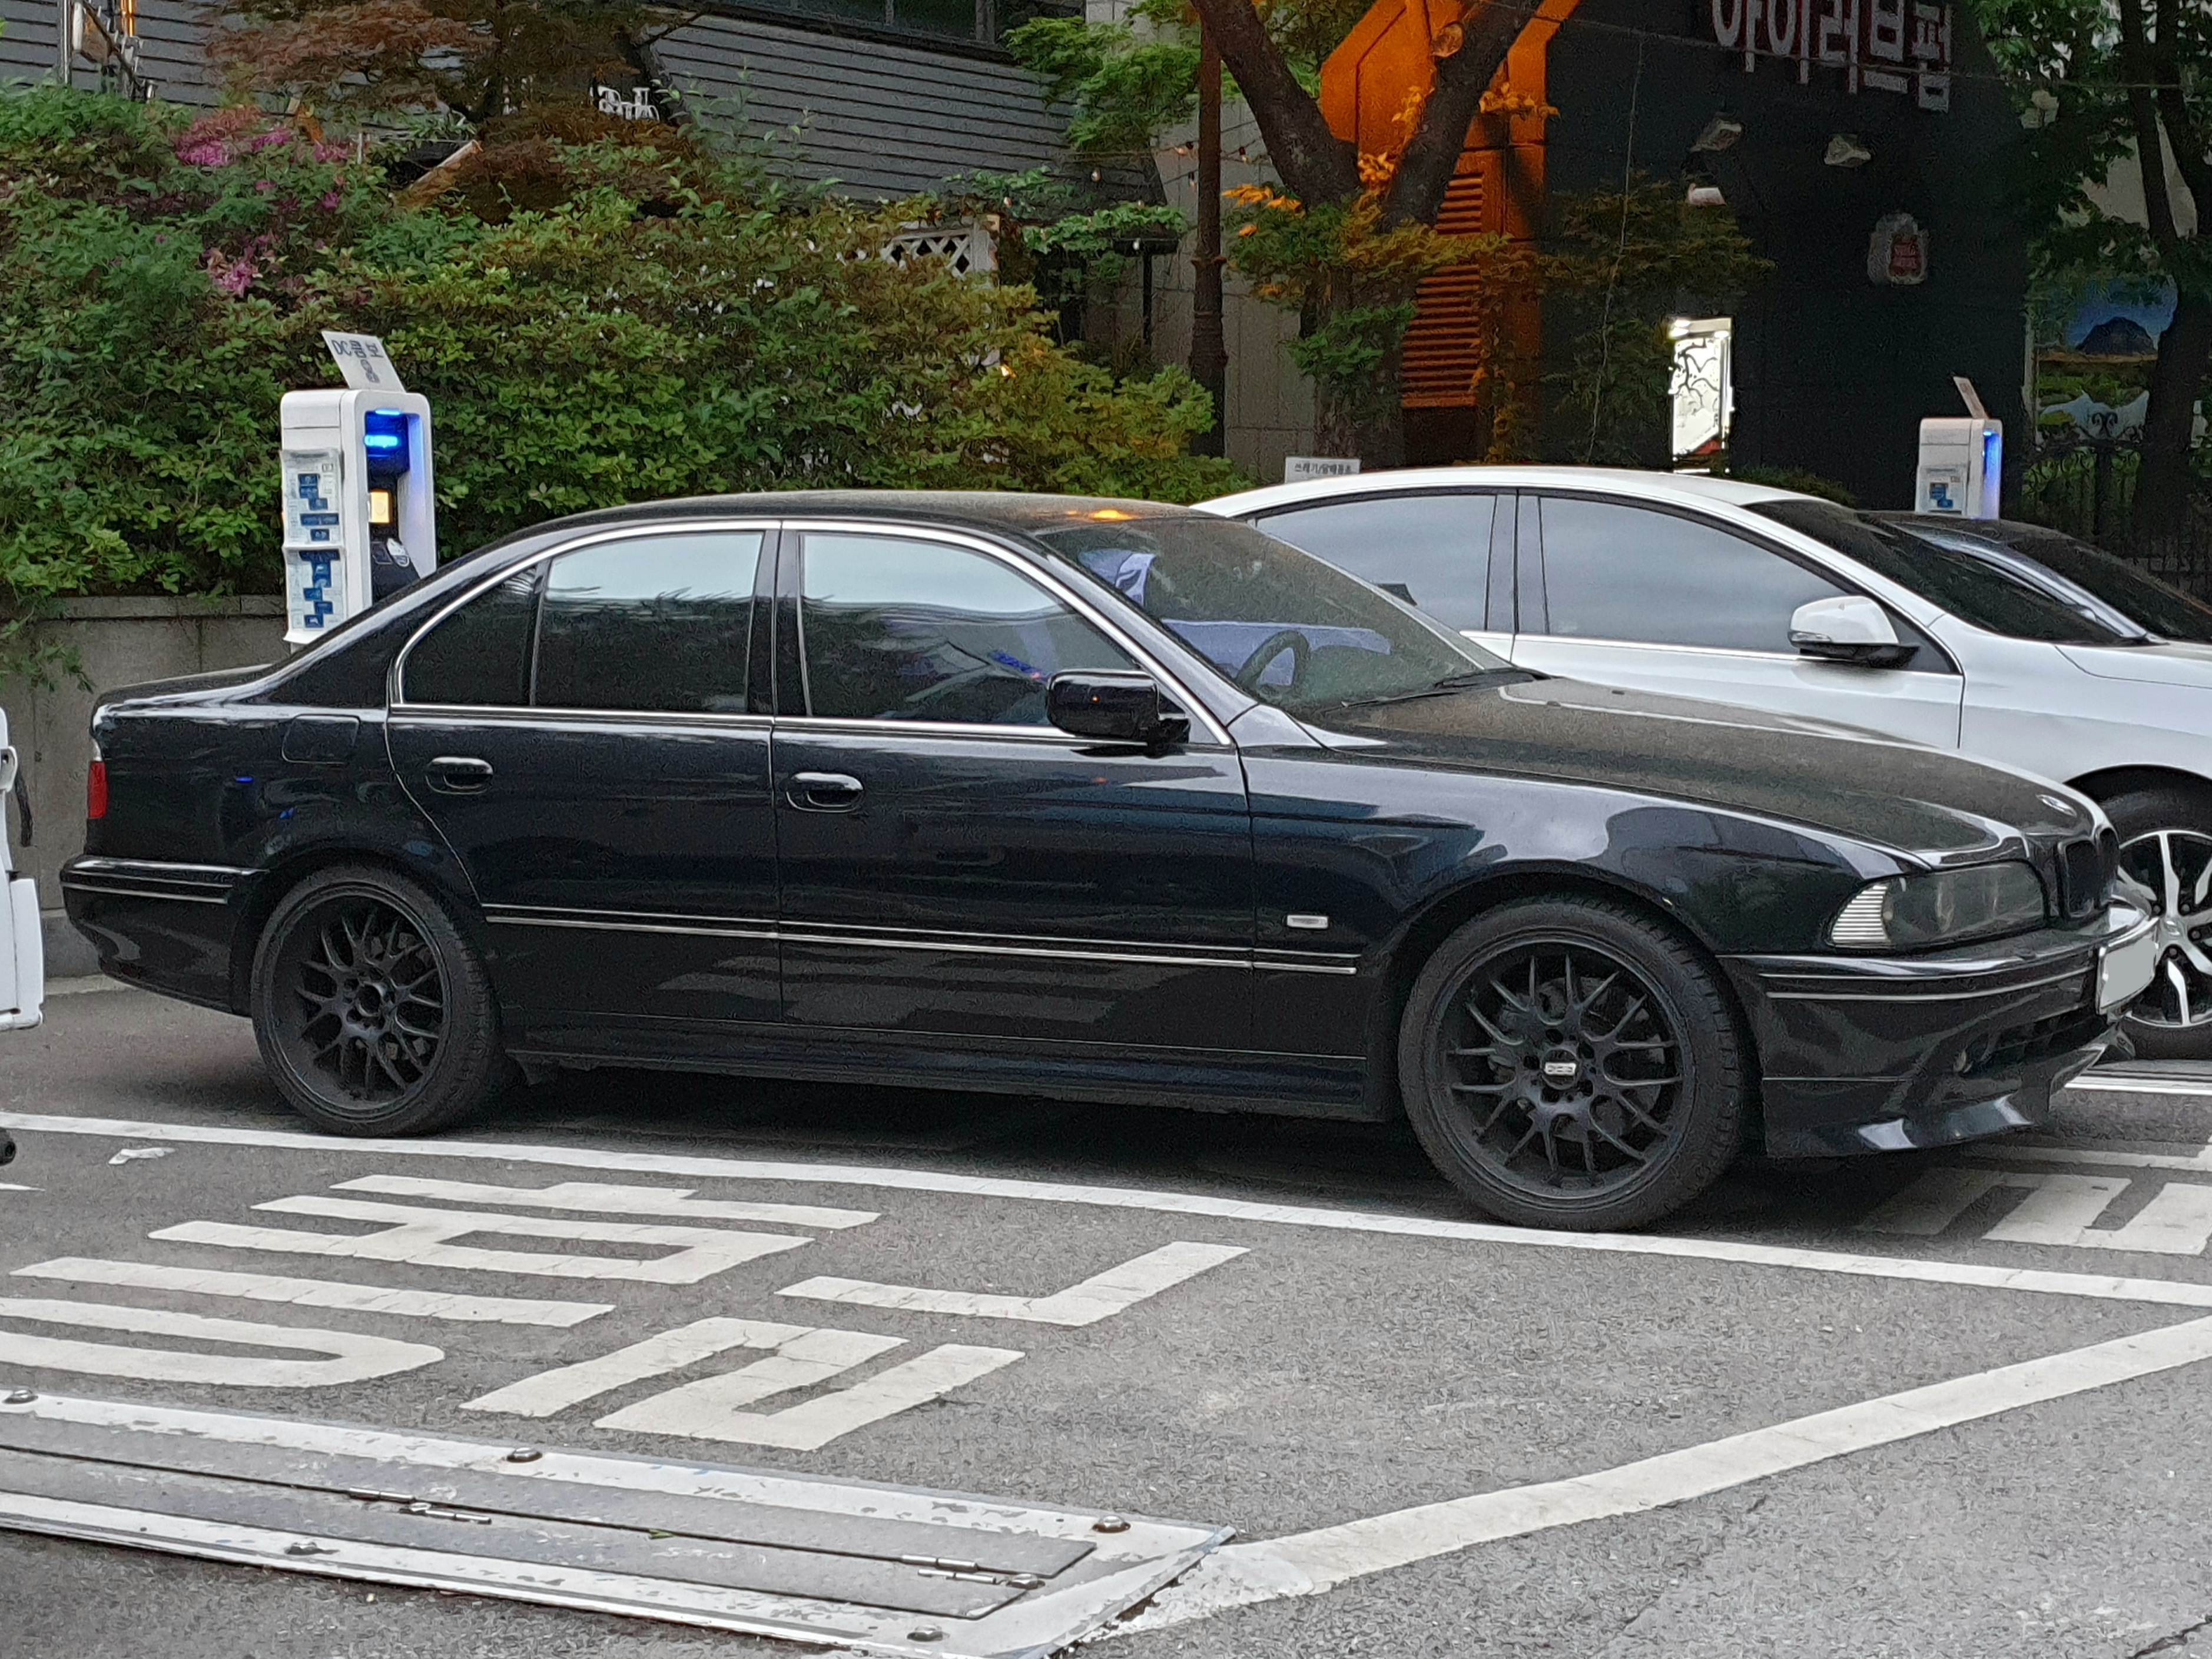 File:BMW E39.jpg - Wikimedia Commons